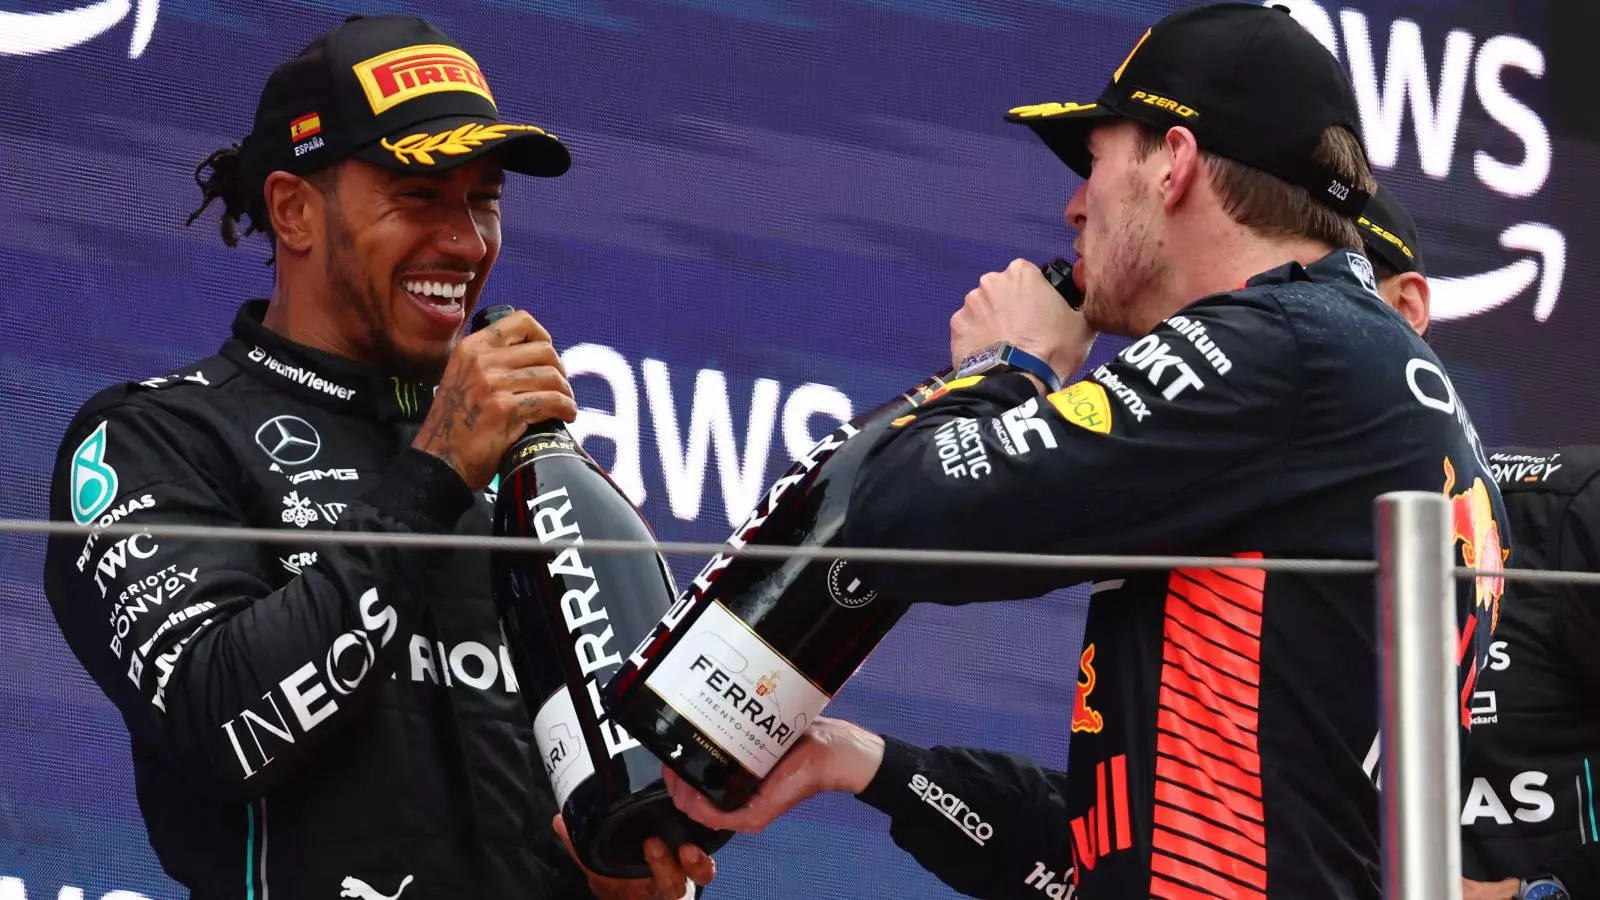 Lewis Hamilton celebrating with Max Verstappen